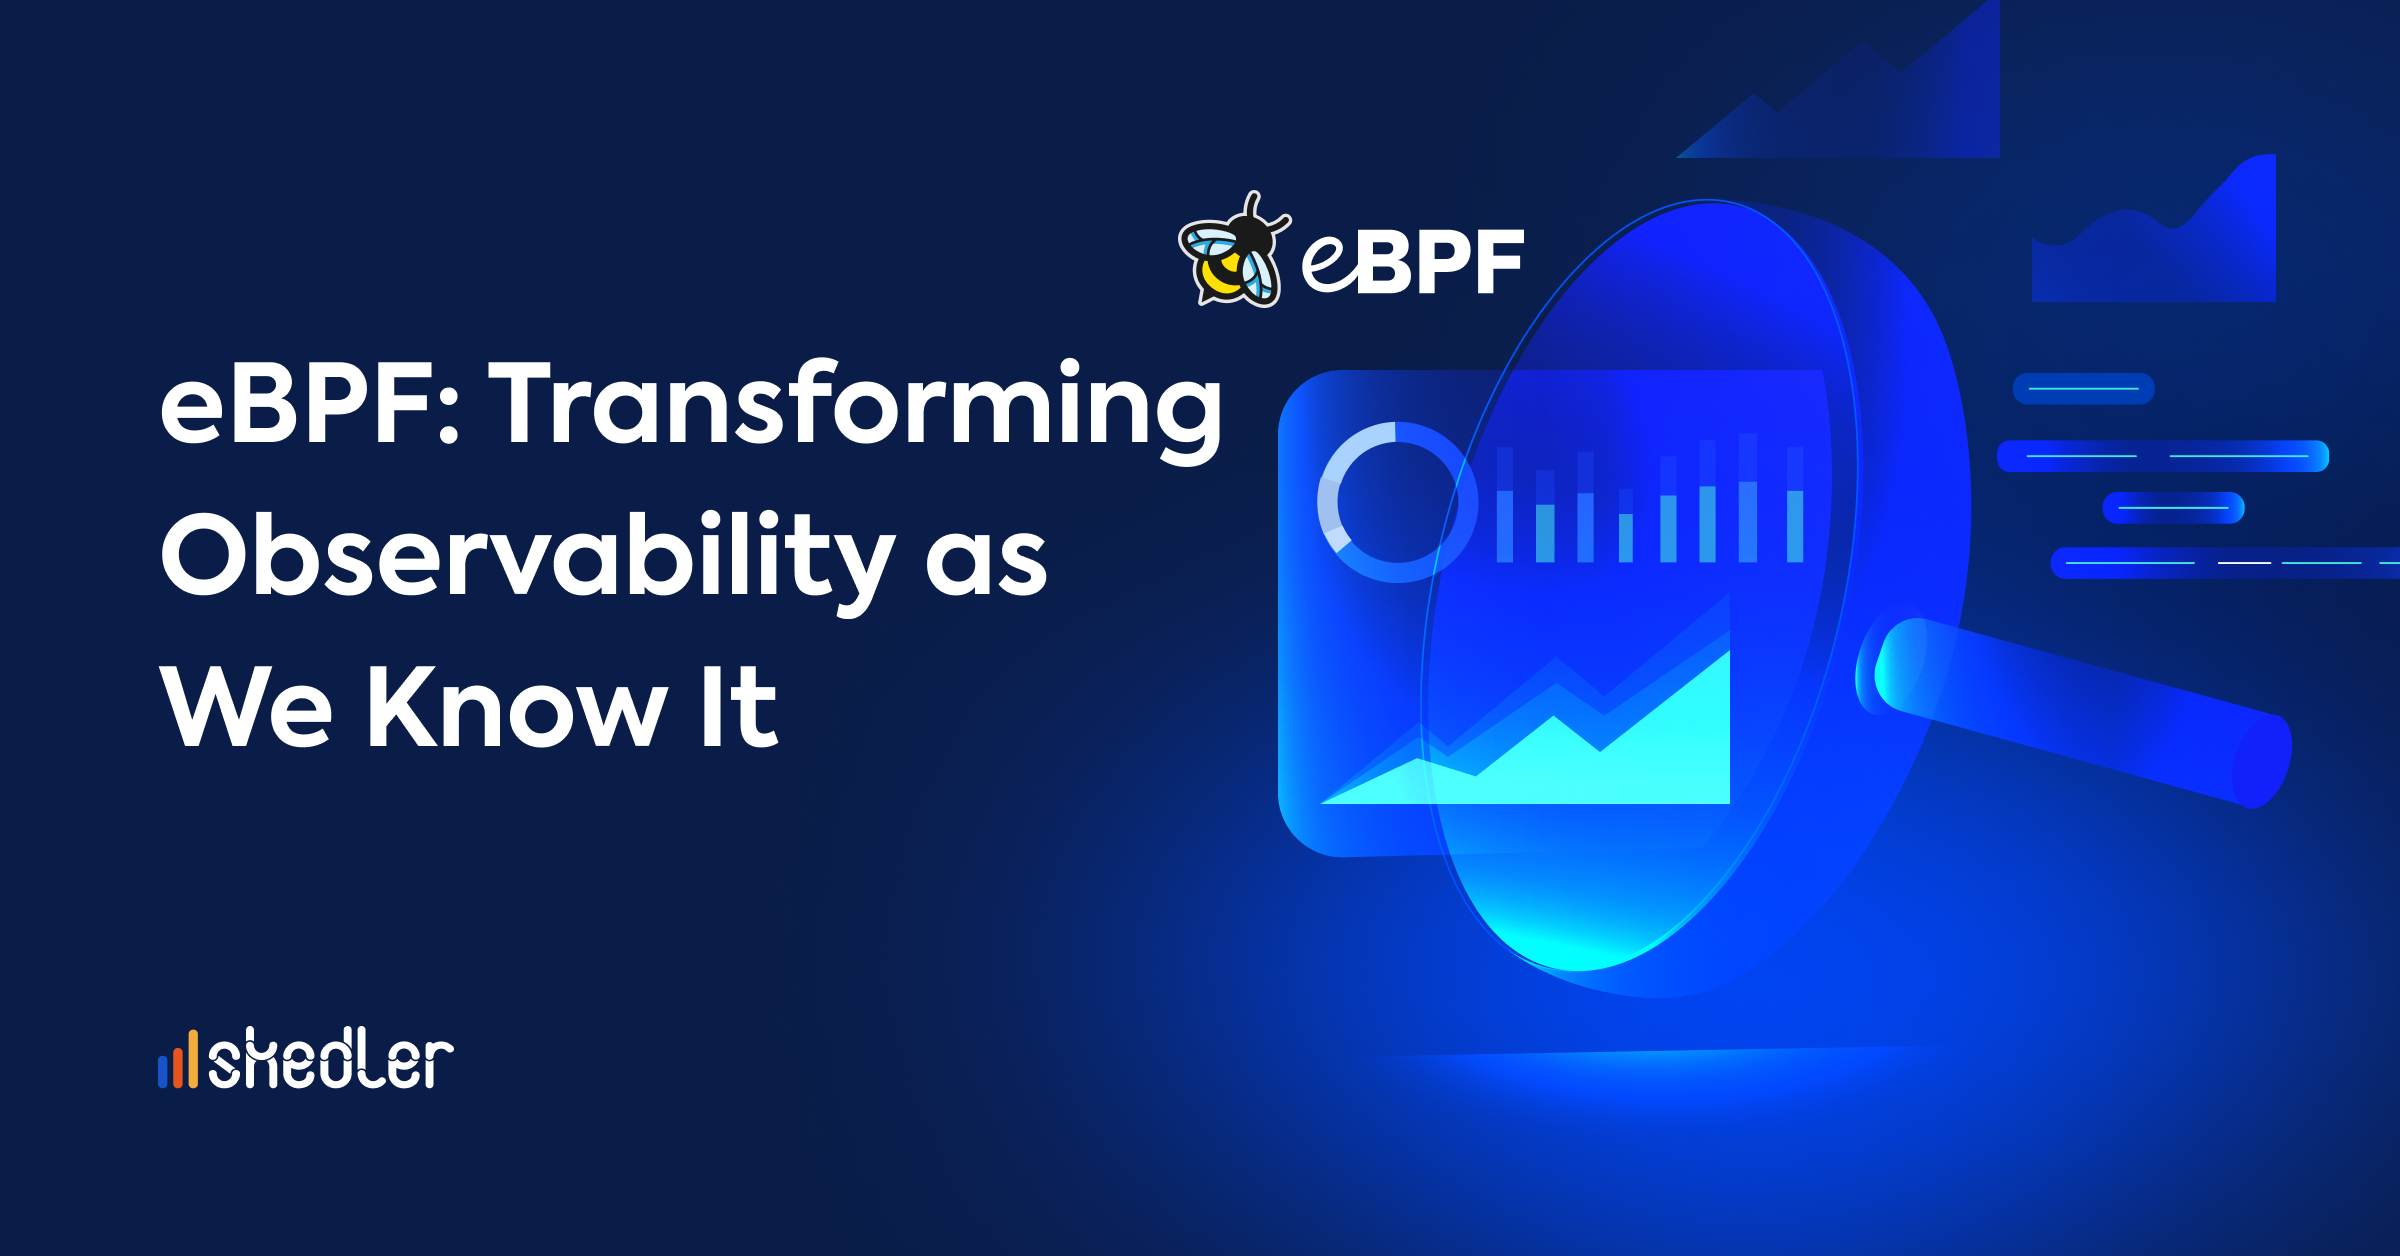 eBPF is transforming observability